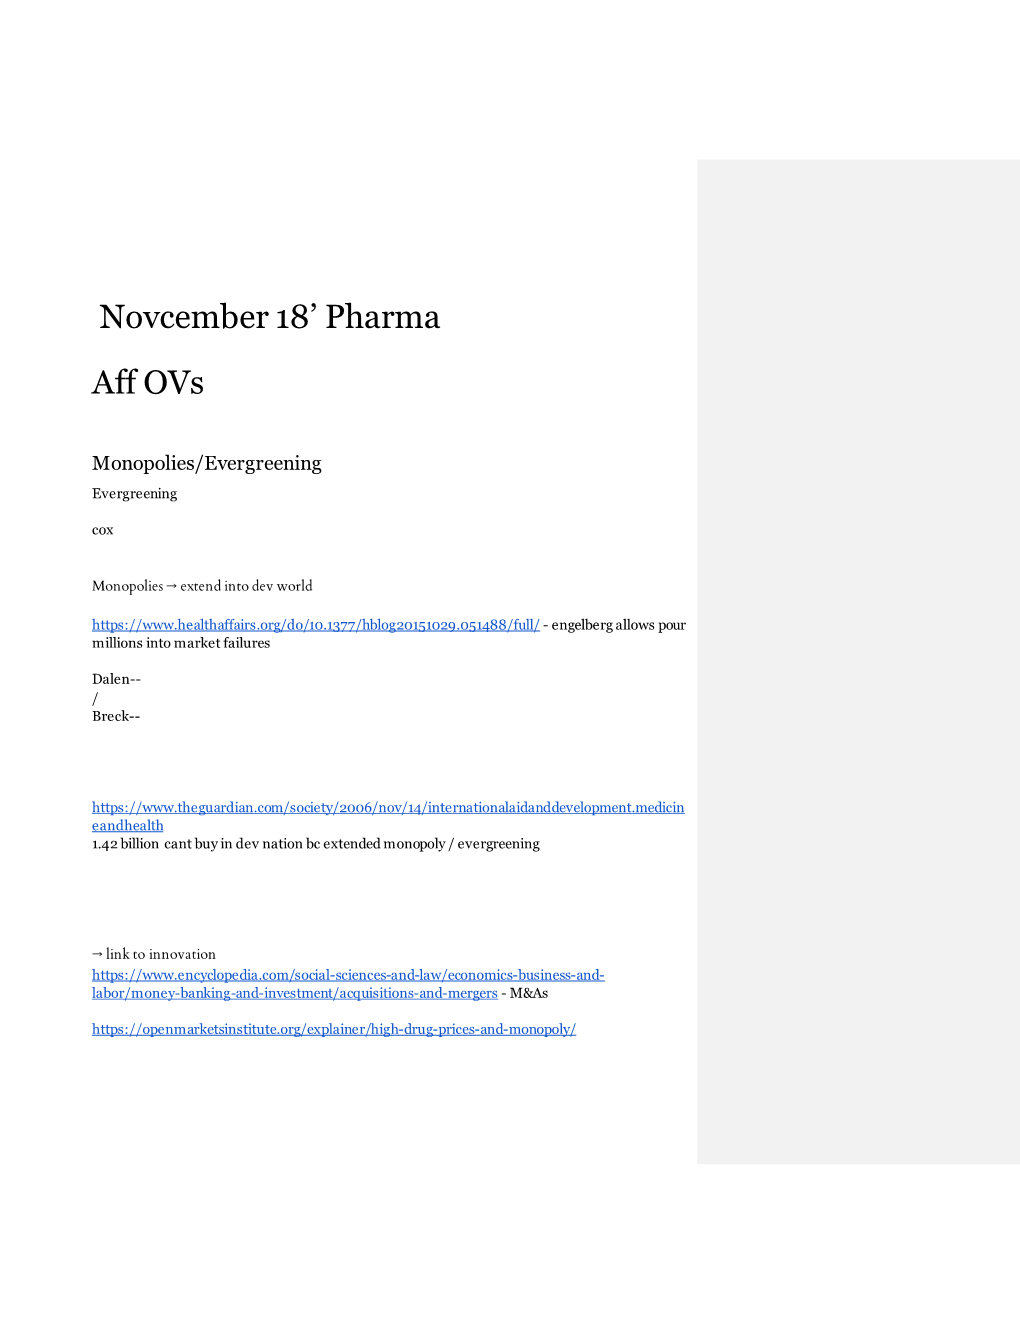 Novcember 18' Pharma Aff